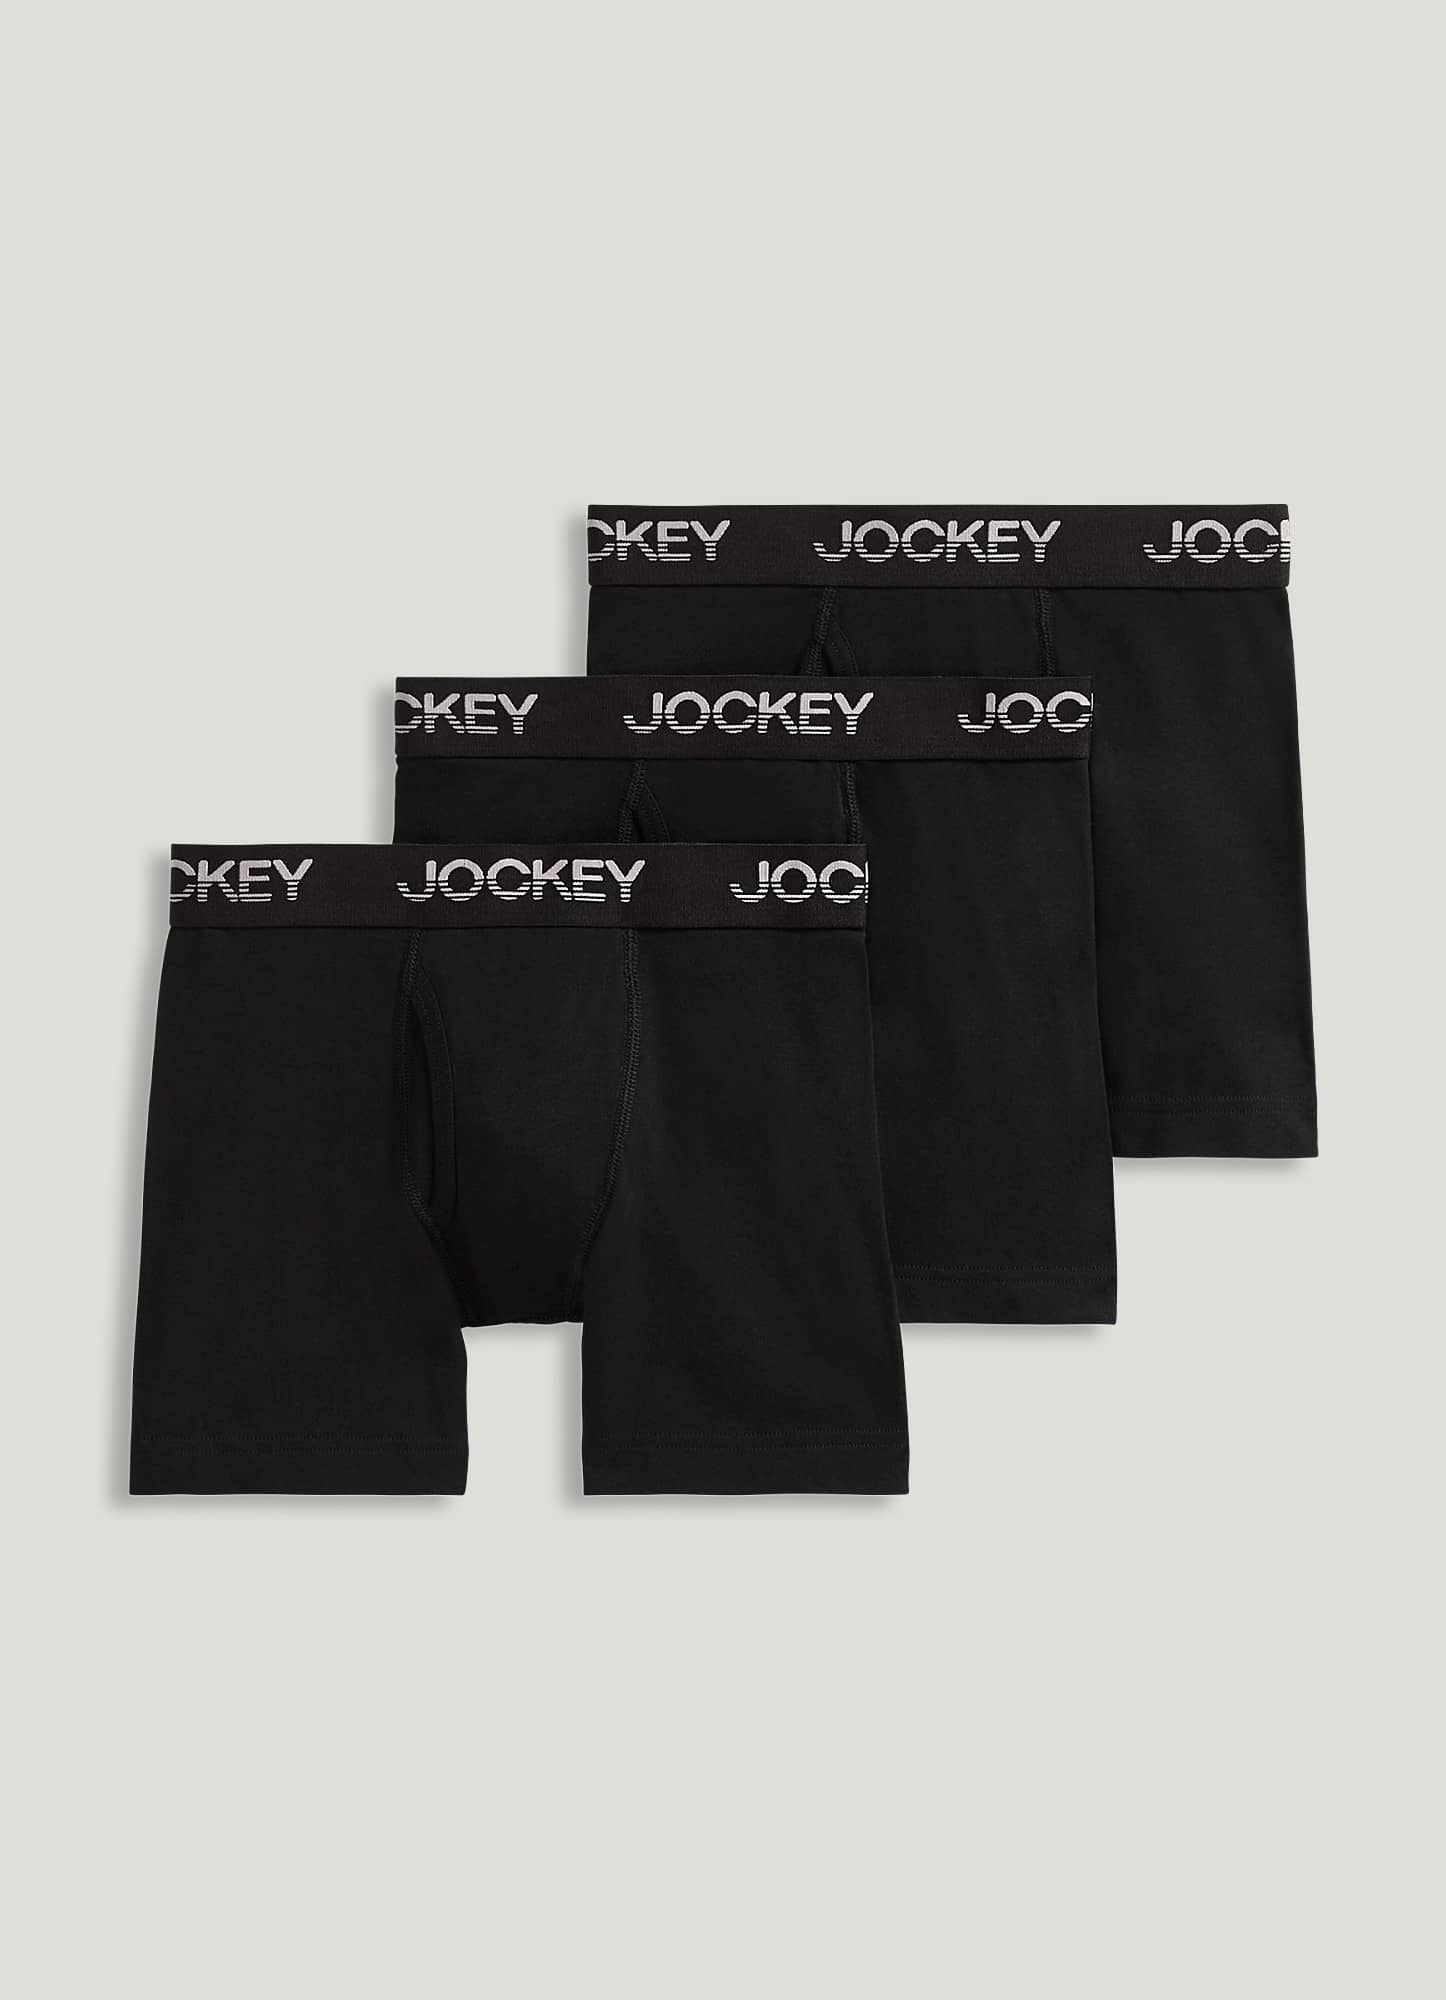 Men's Jockey 4-Pack Active Cotton Stretch Boxer Briefs (Black Color)  Underwear